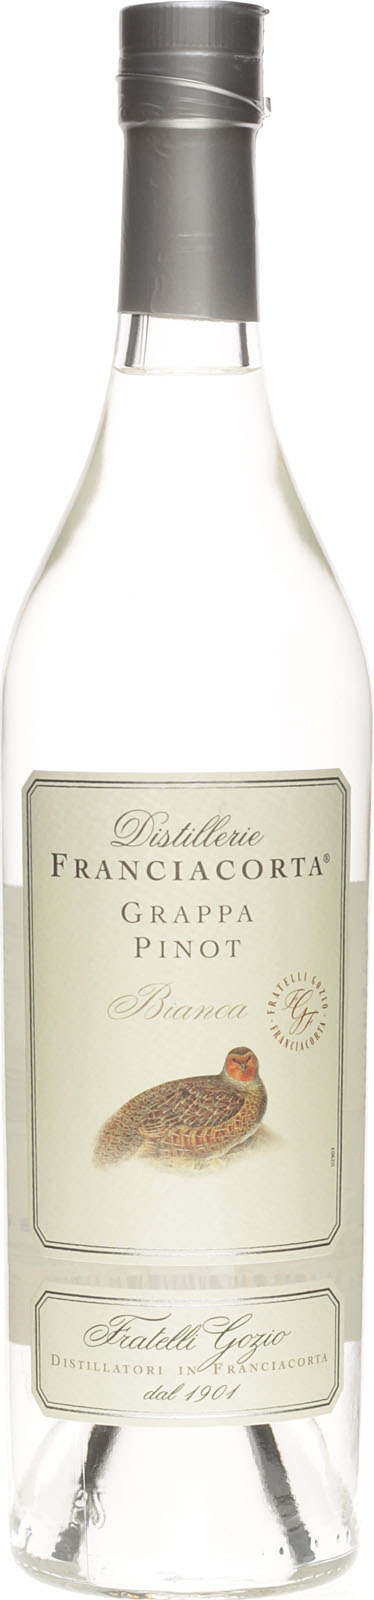 Grappa Pinot von Franciacorta 43% 500ml